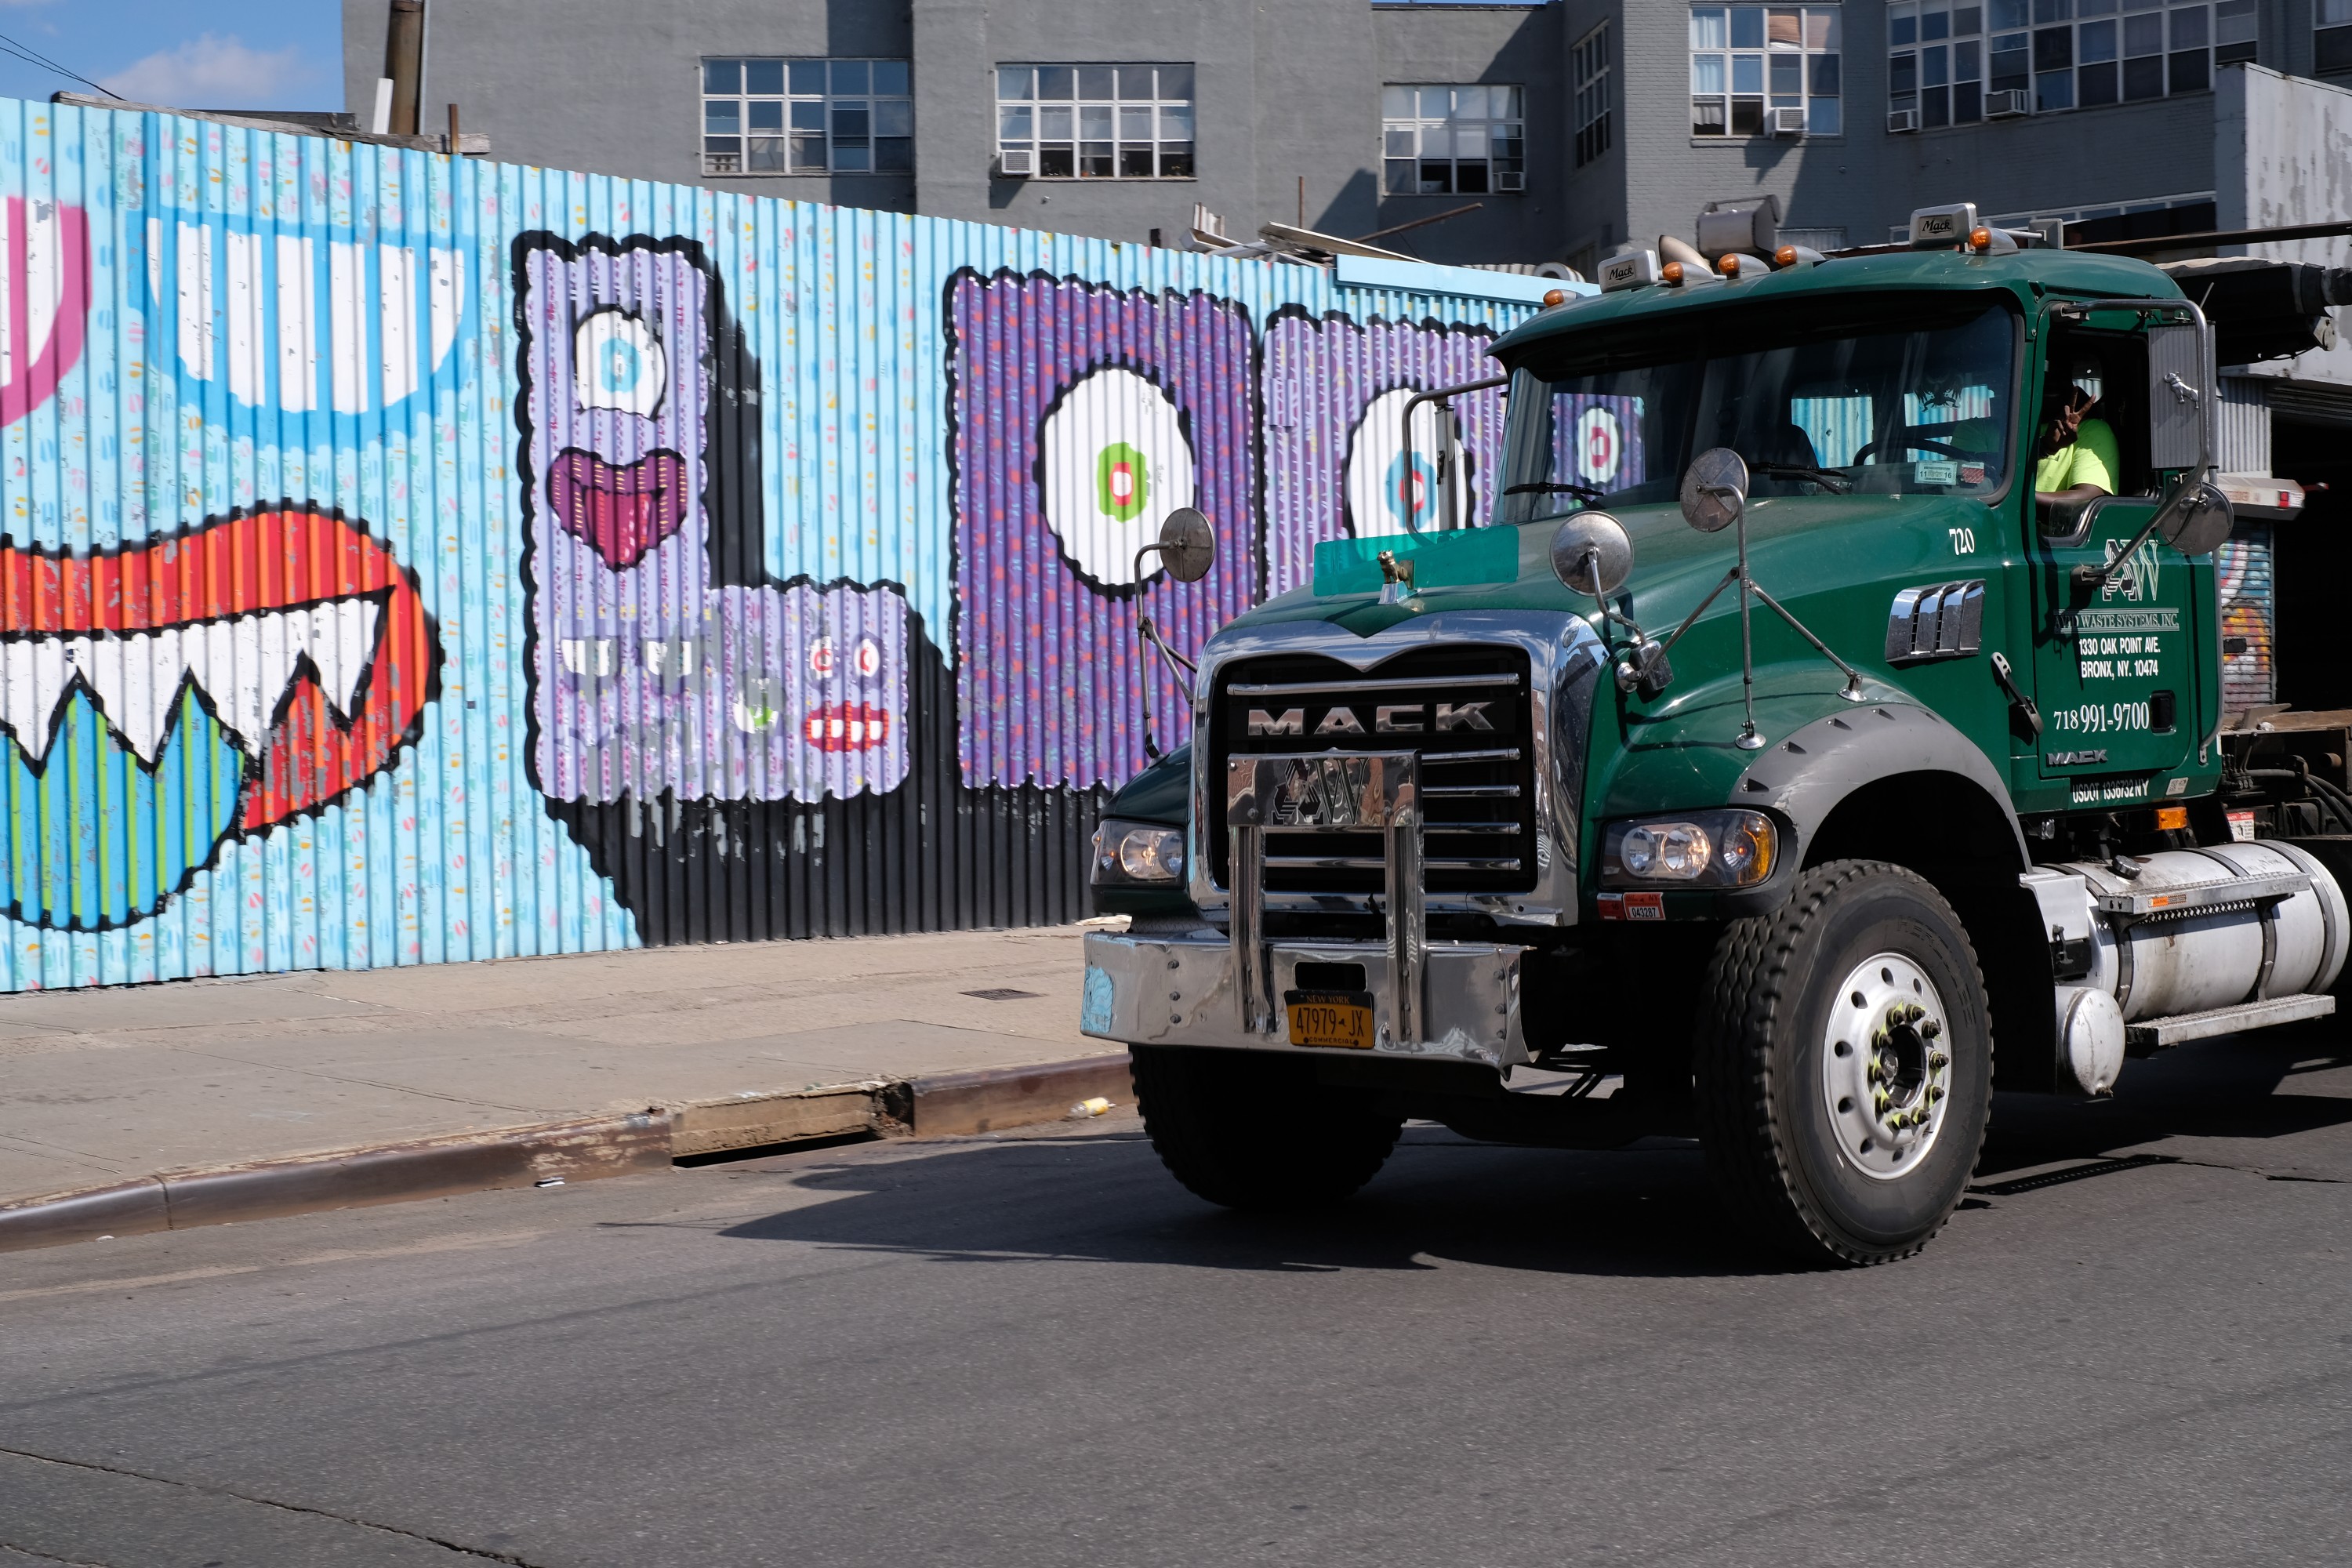 cab of Mack truck by street art